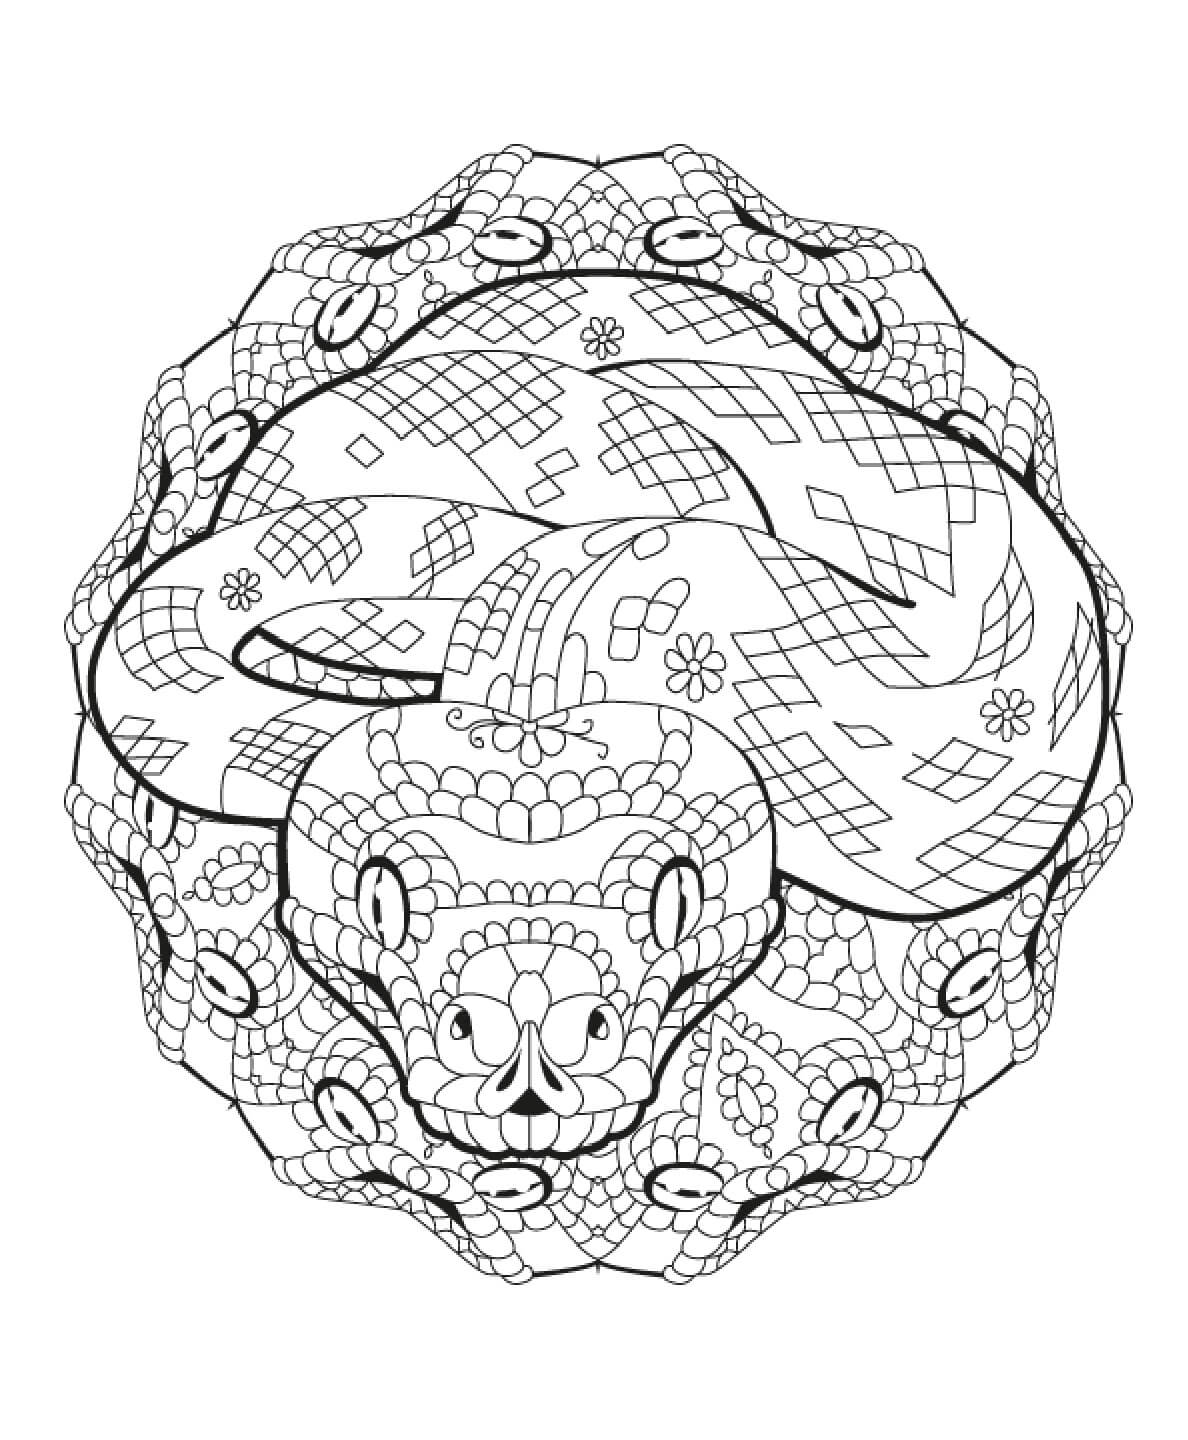 Mandala Snake Coloring Page - Sheet 6 Mandalas